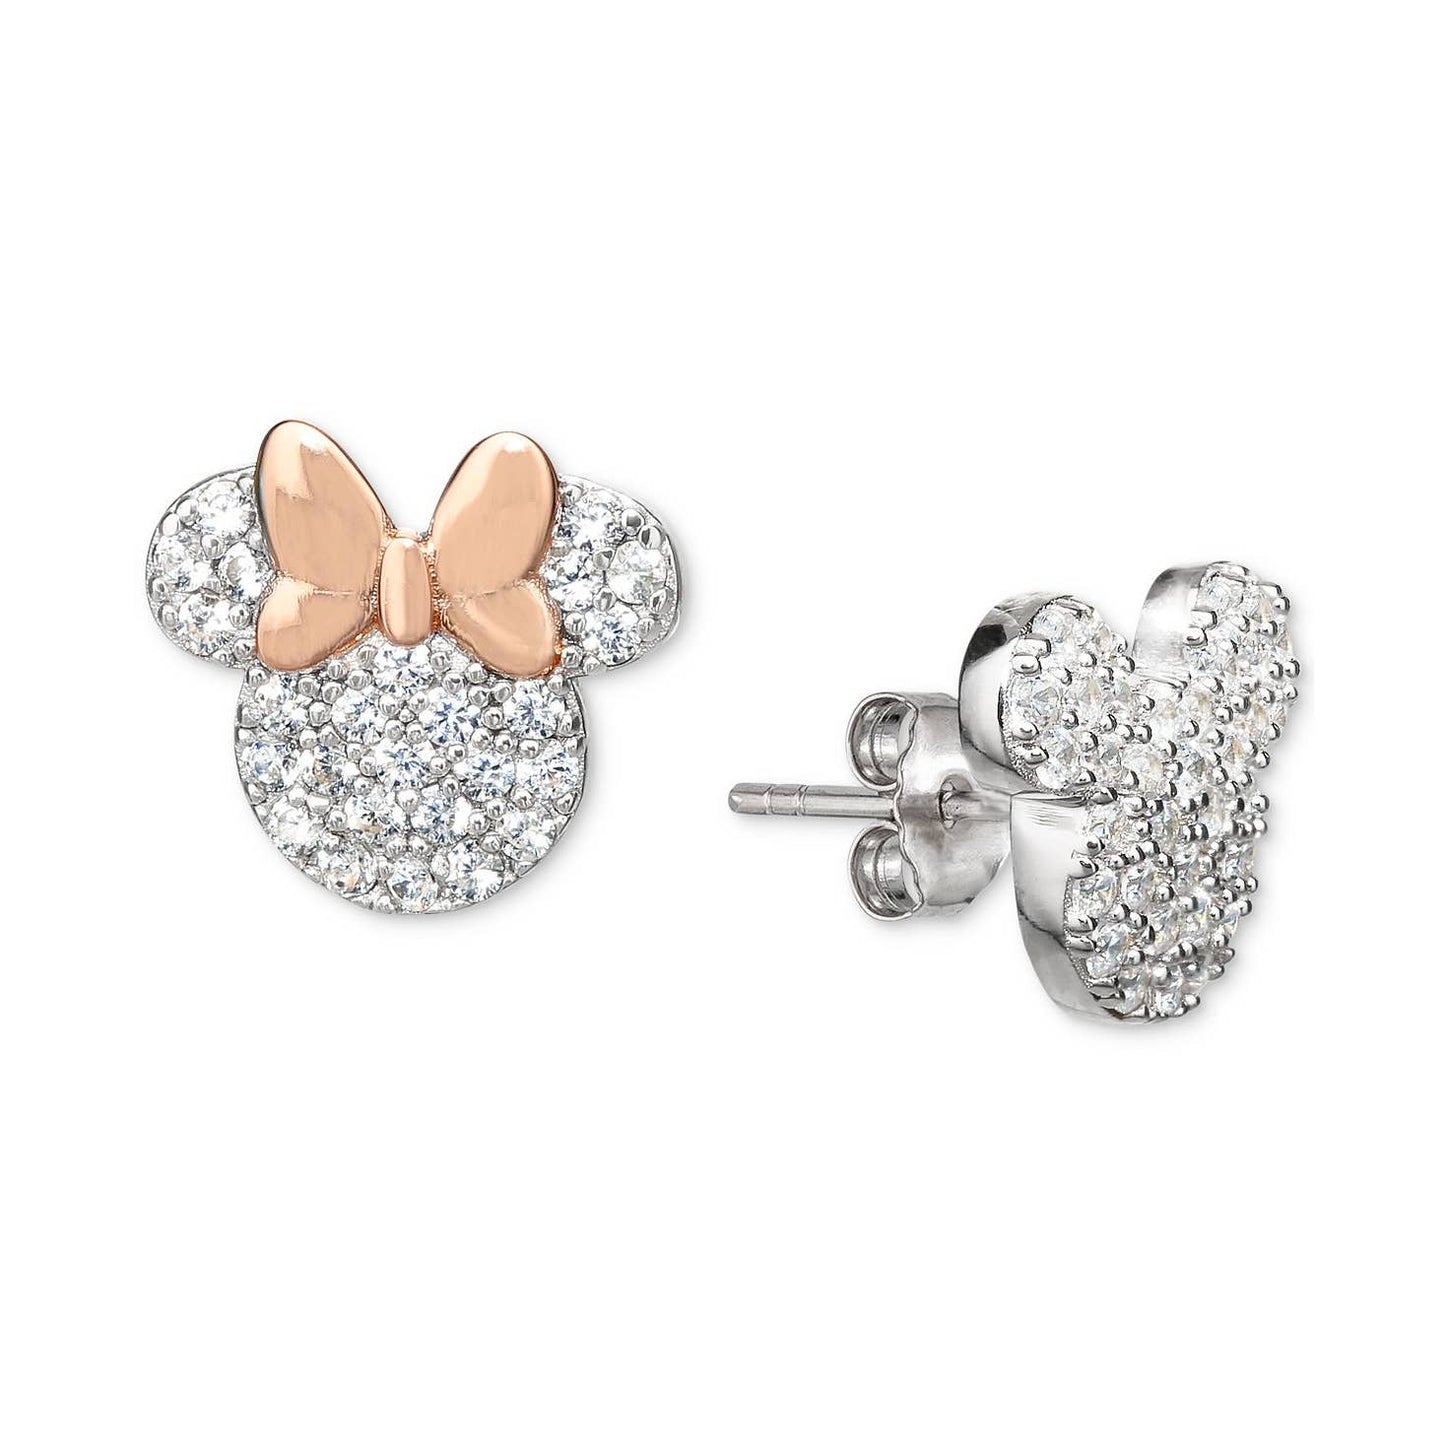 DISNEY Mickey Minnie Mismatch Stud Earrings in Sterling Silver & 18k Rose Gold-Plate